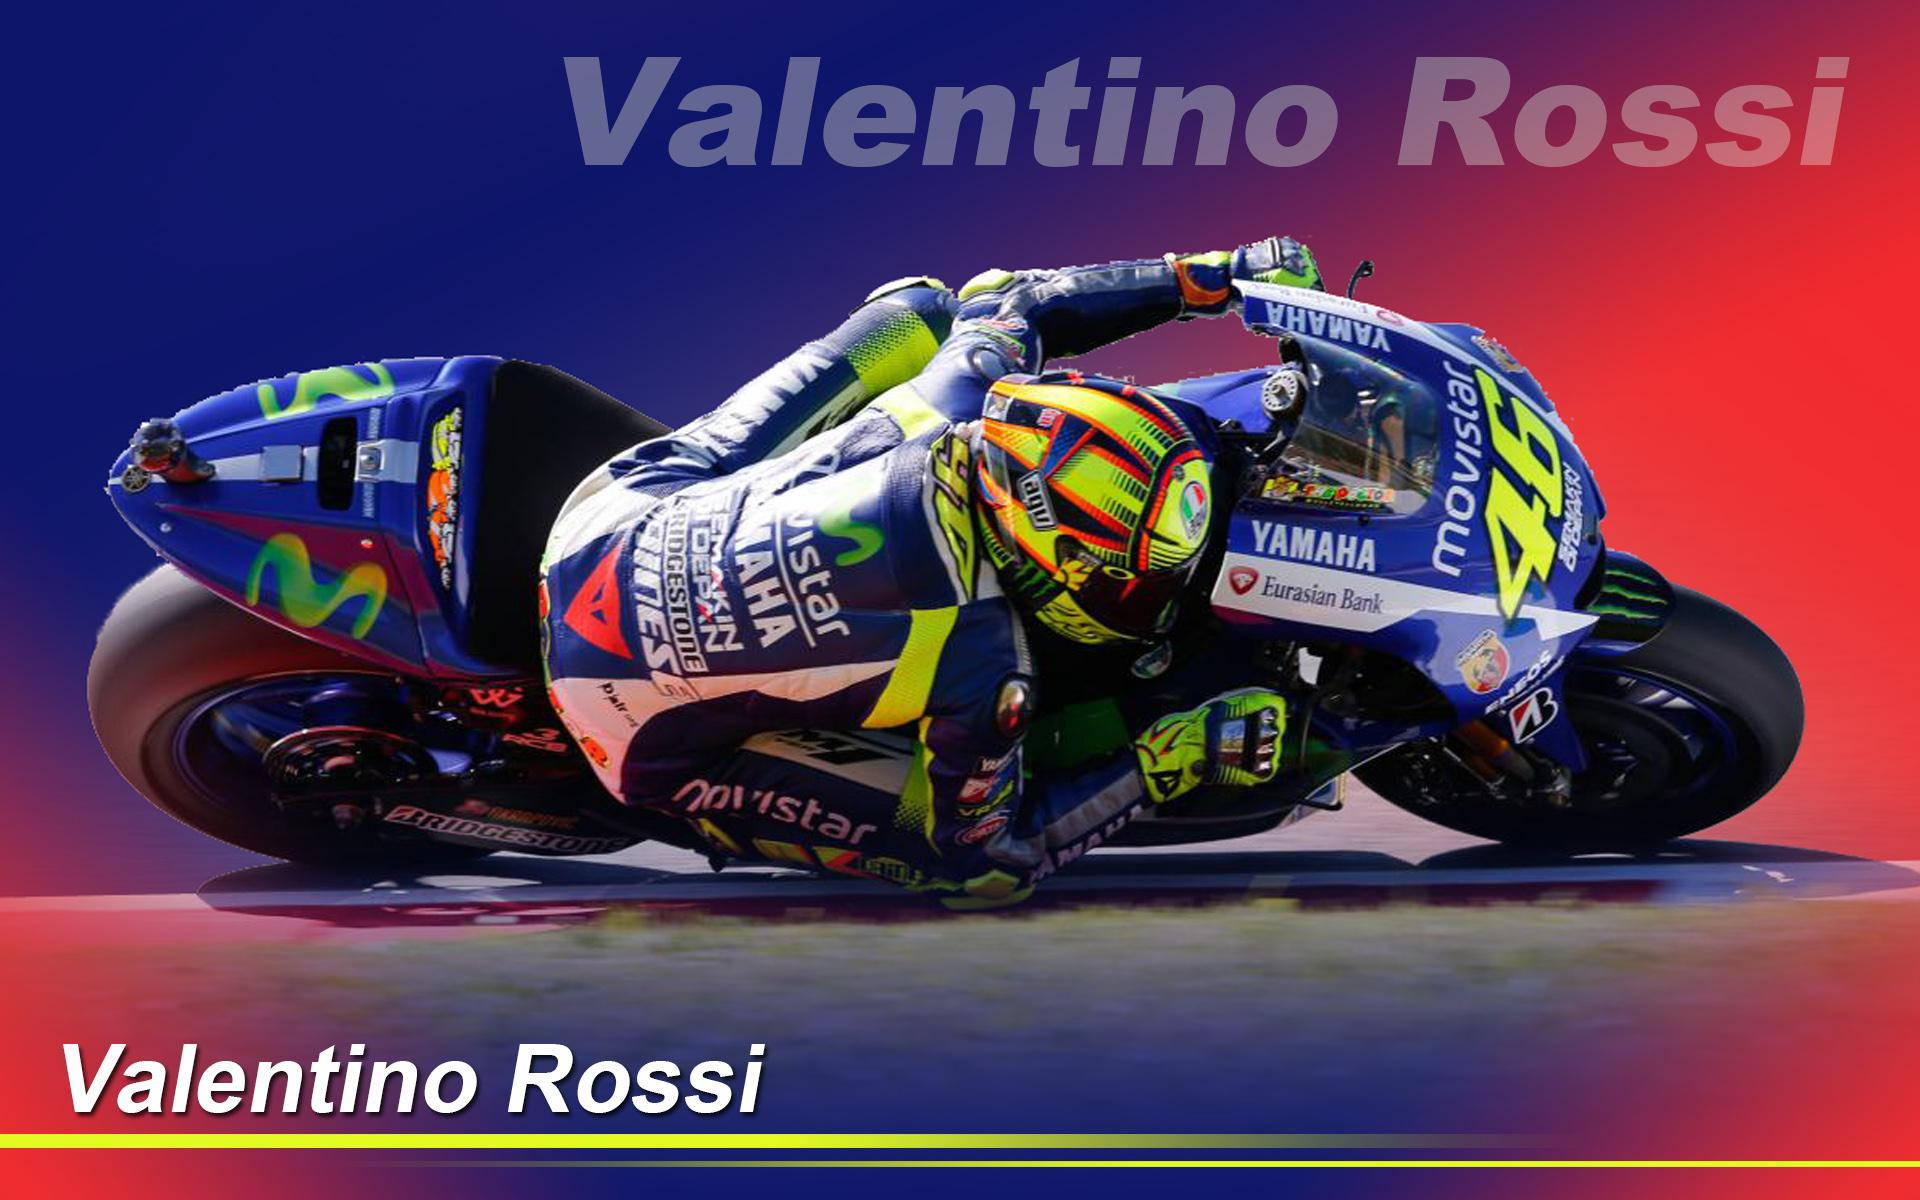 Free Valentino Rossi Wallpaper Downloads, [100+] Valentino Rossi Wallpapers  for FREE 